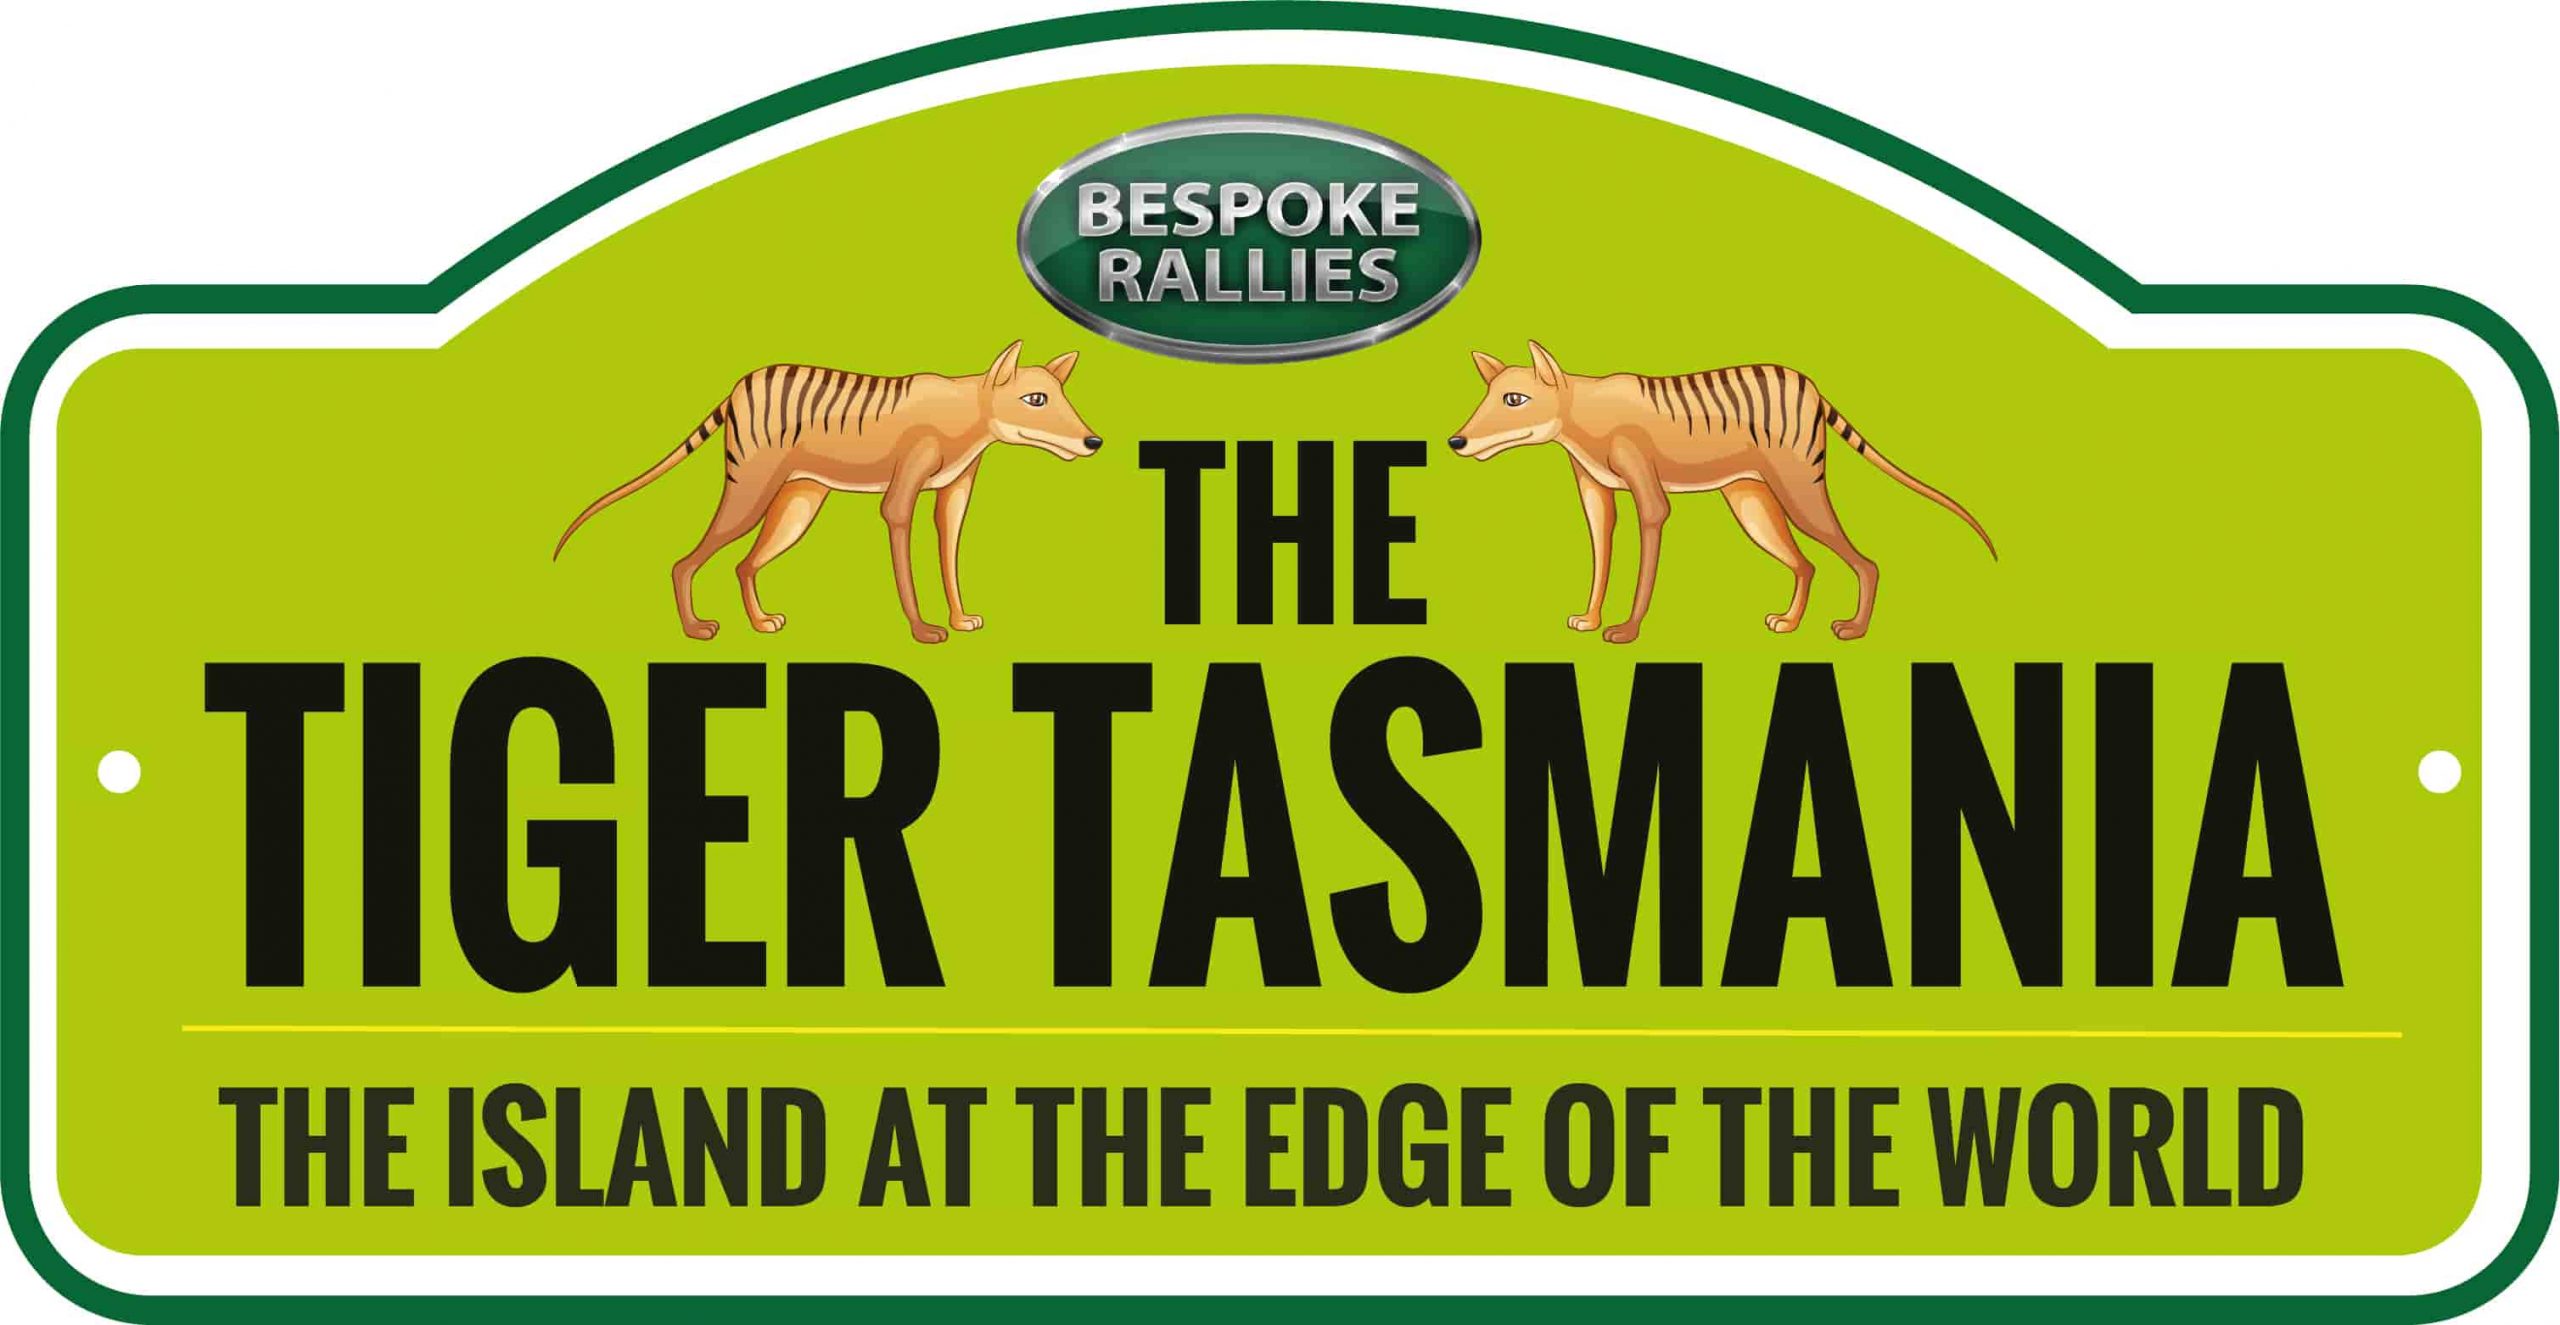 tiger tasmania rally